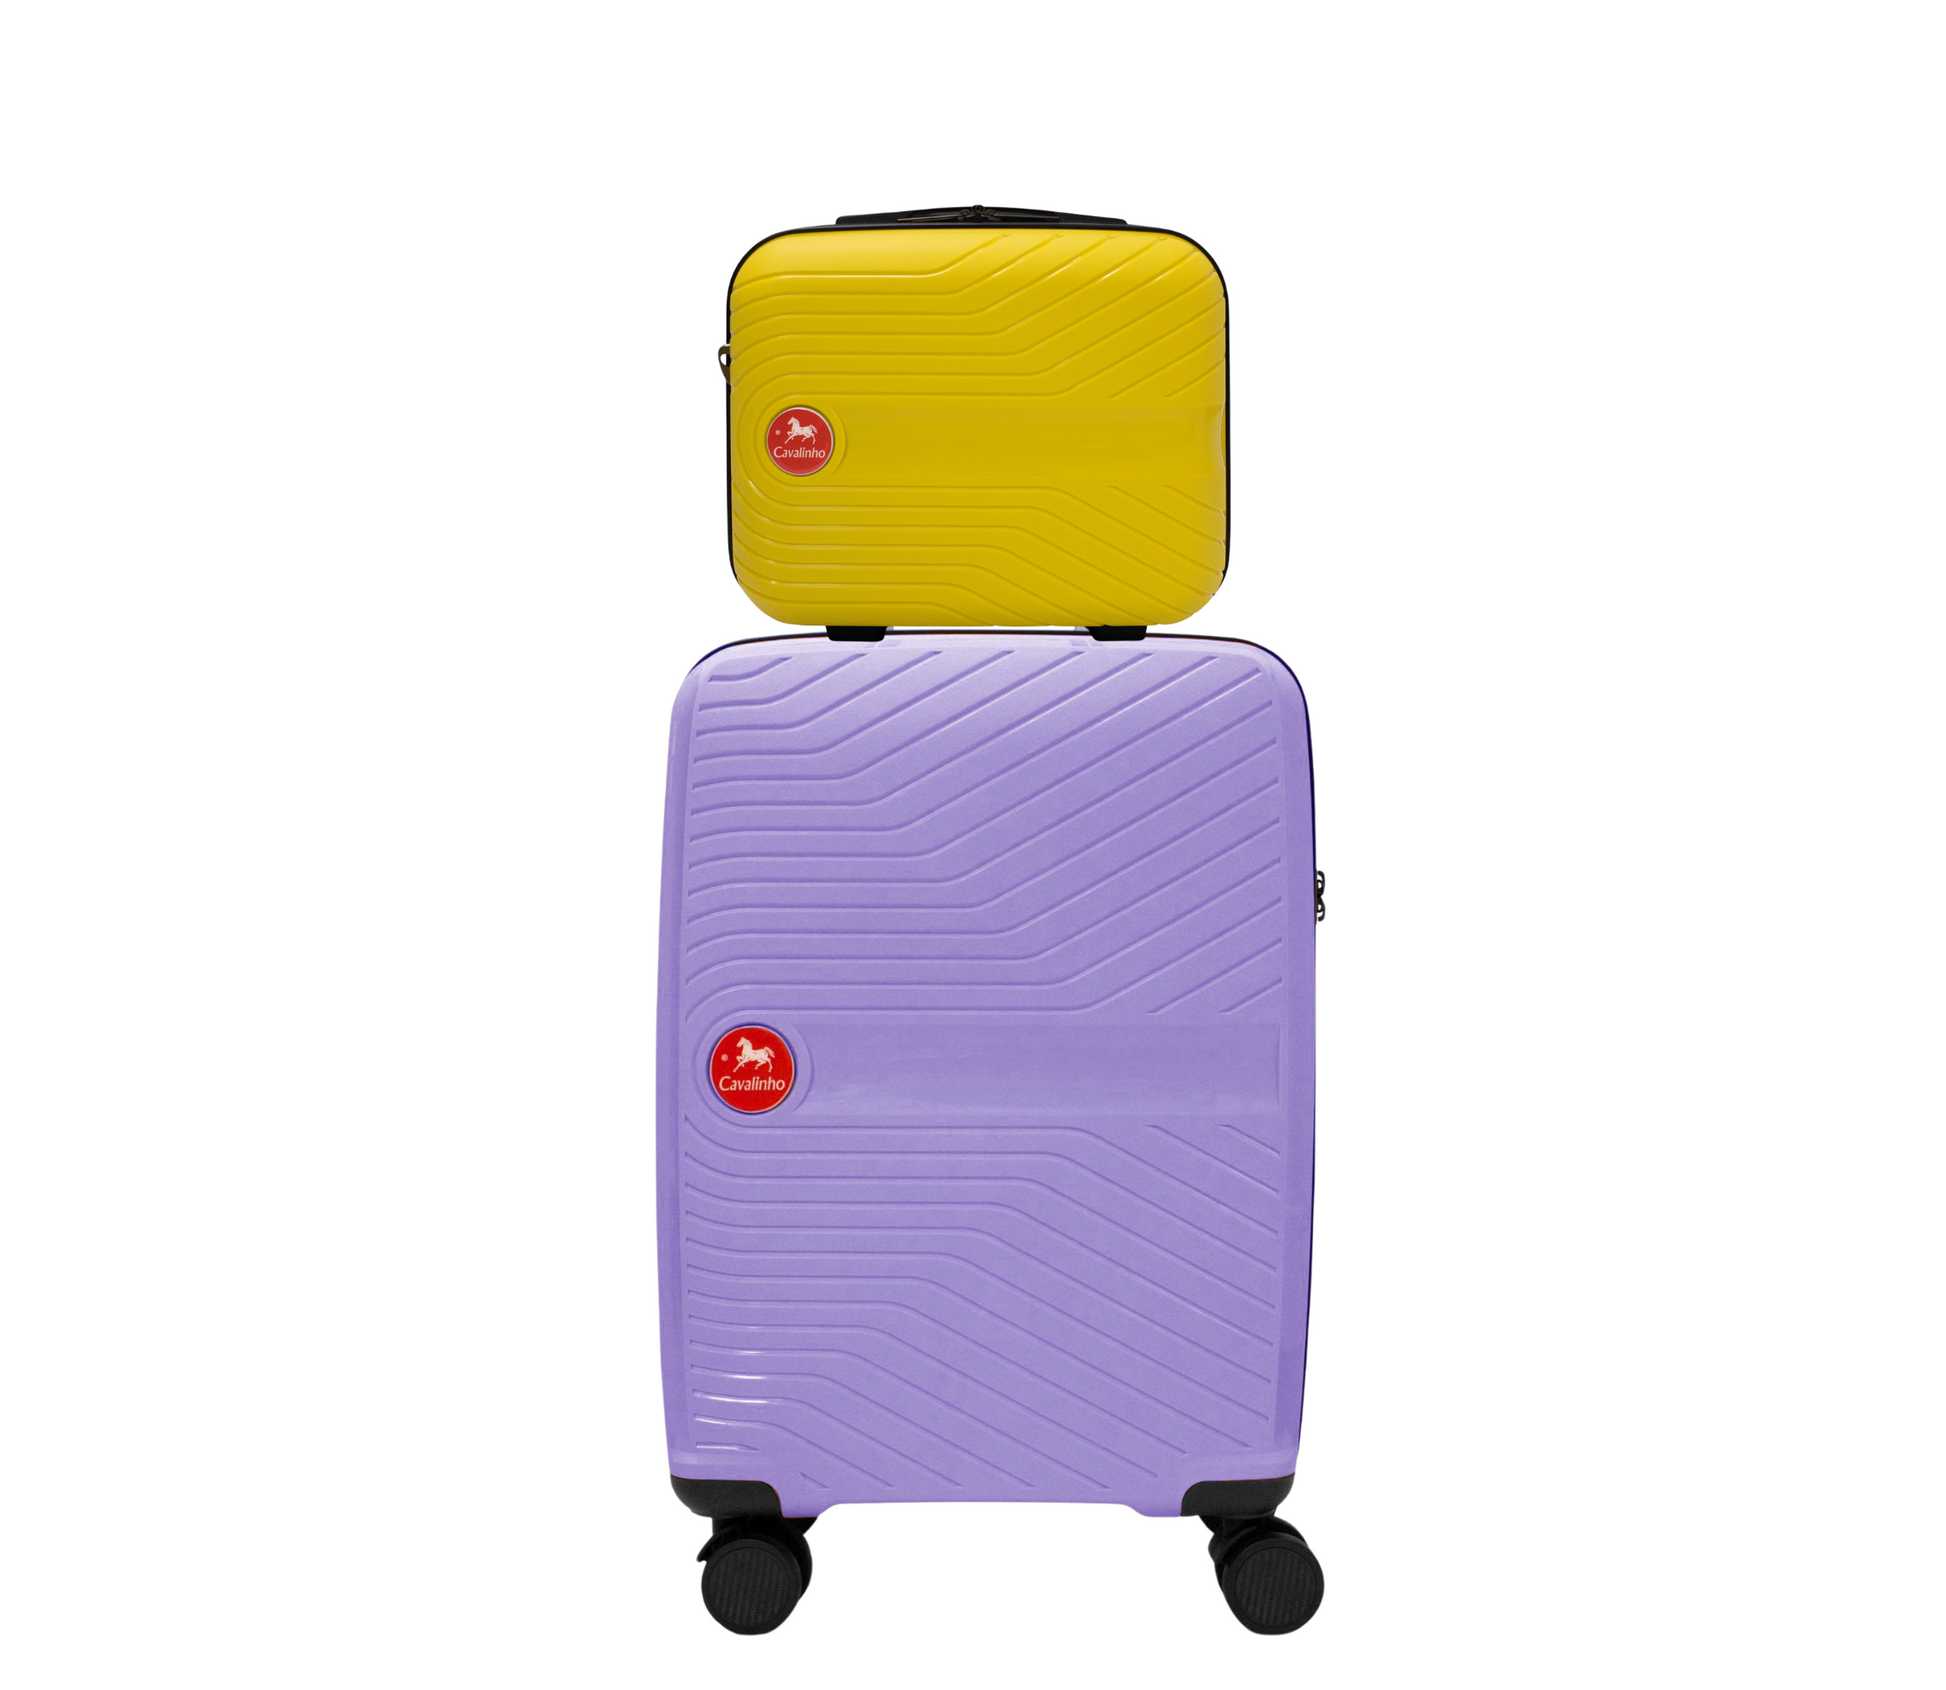 Cavalinho Colorful 2 Piece Luggage Set (15" & 19") - Yellow Lilac - 68020004.0839.S1519._1